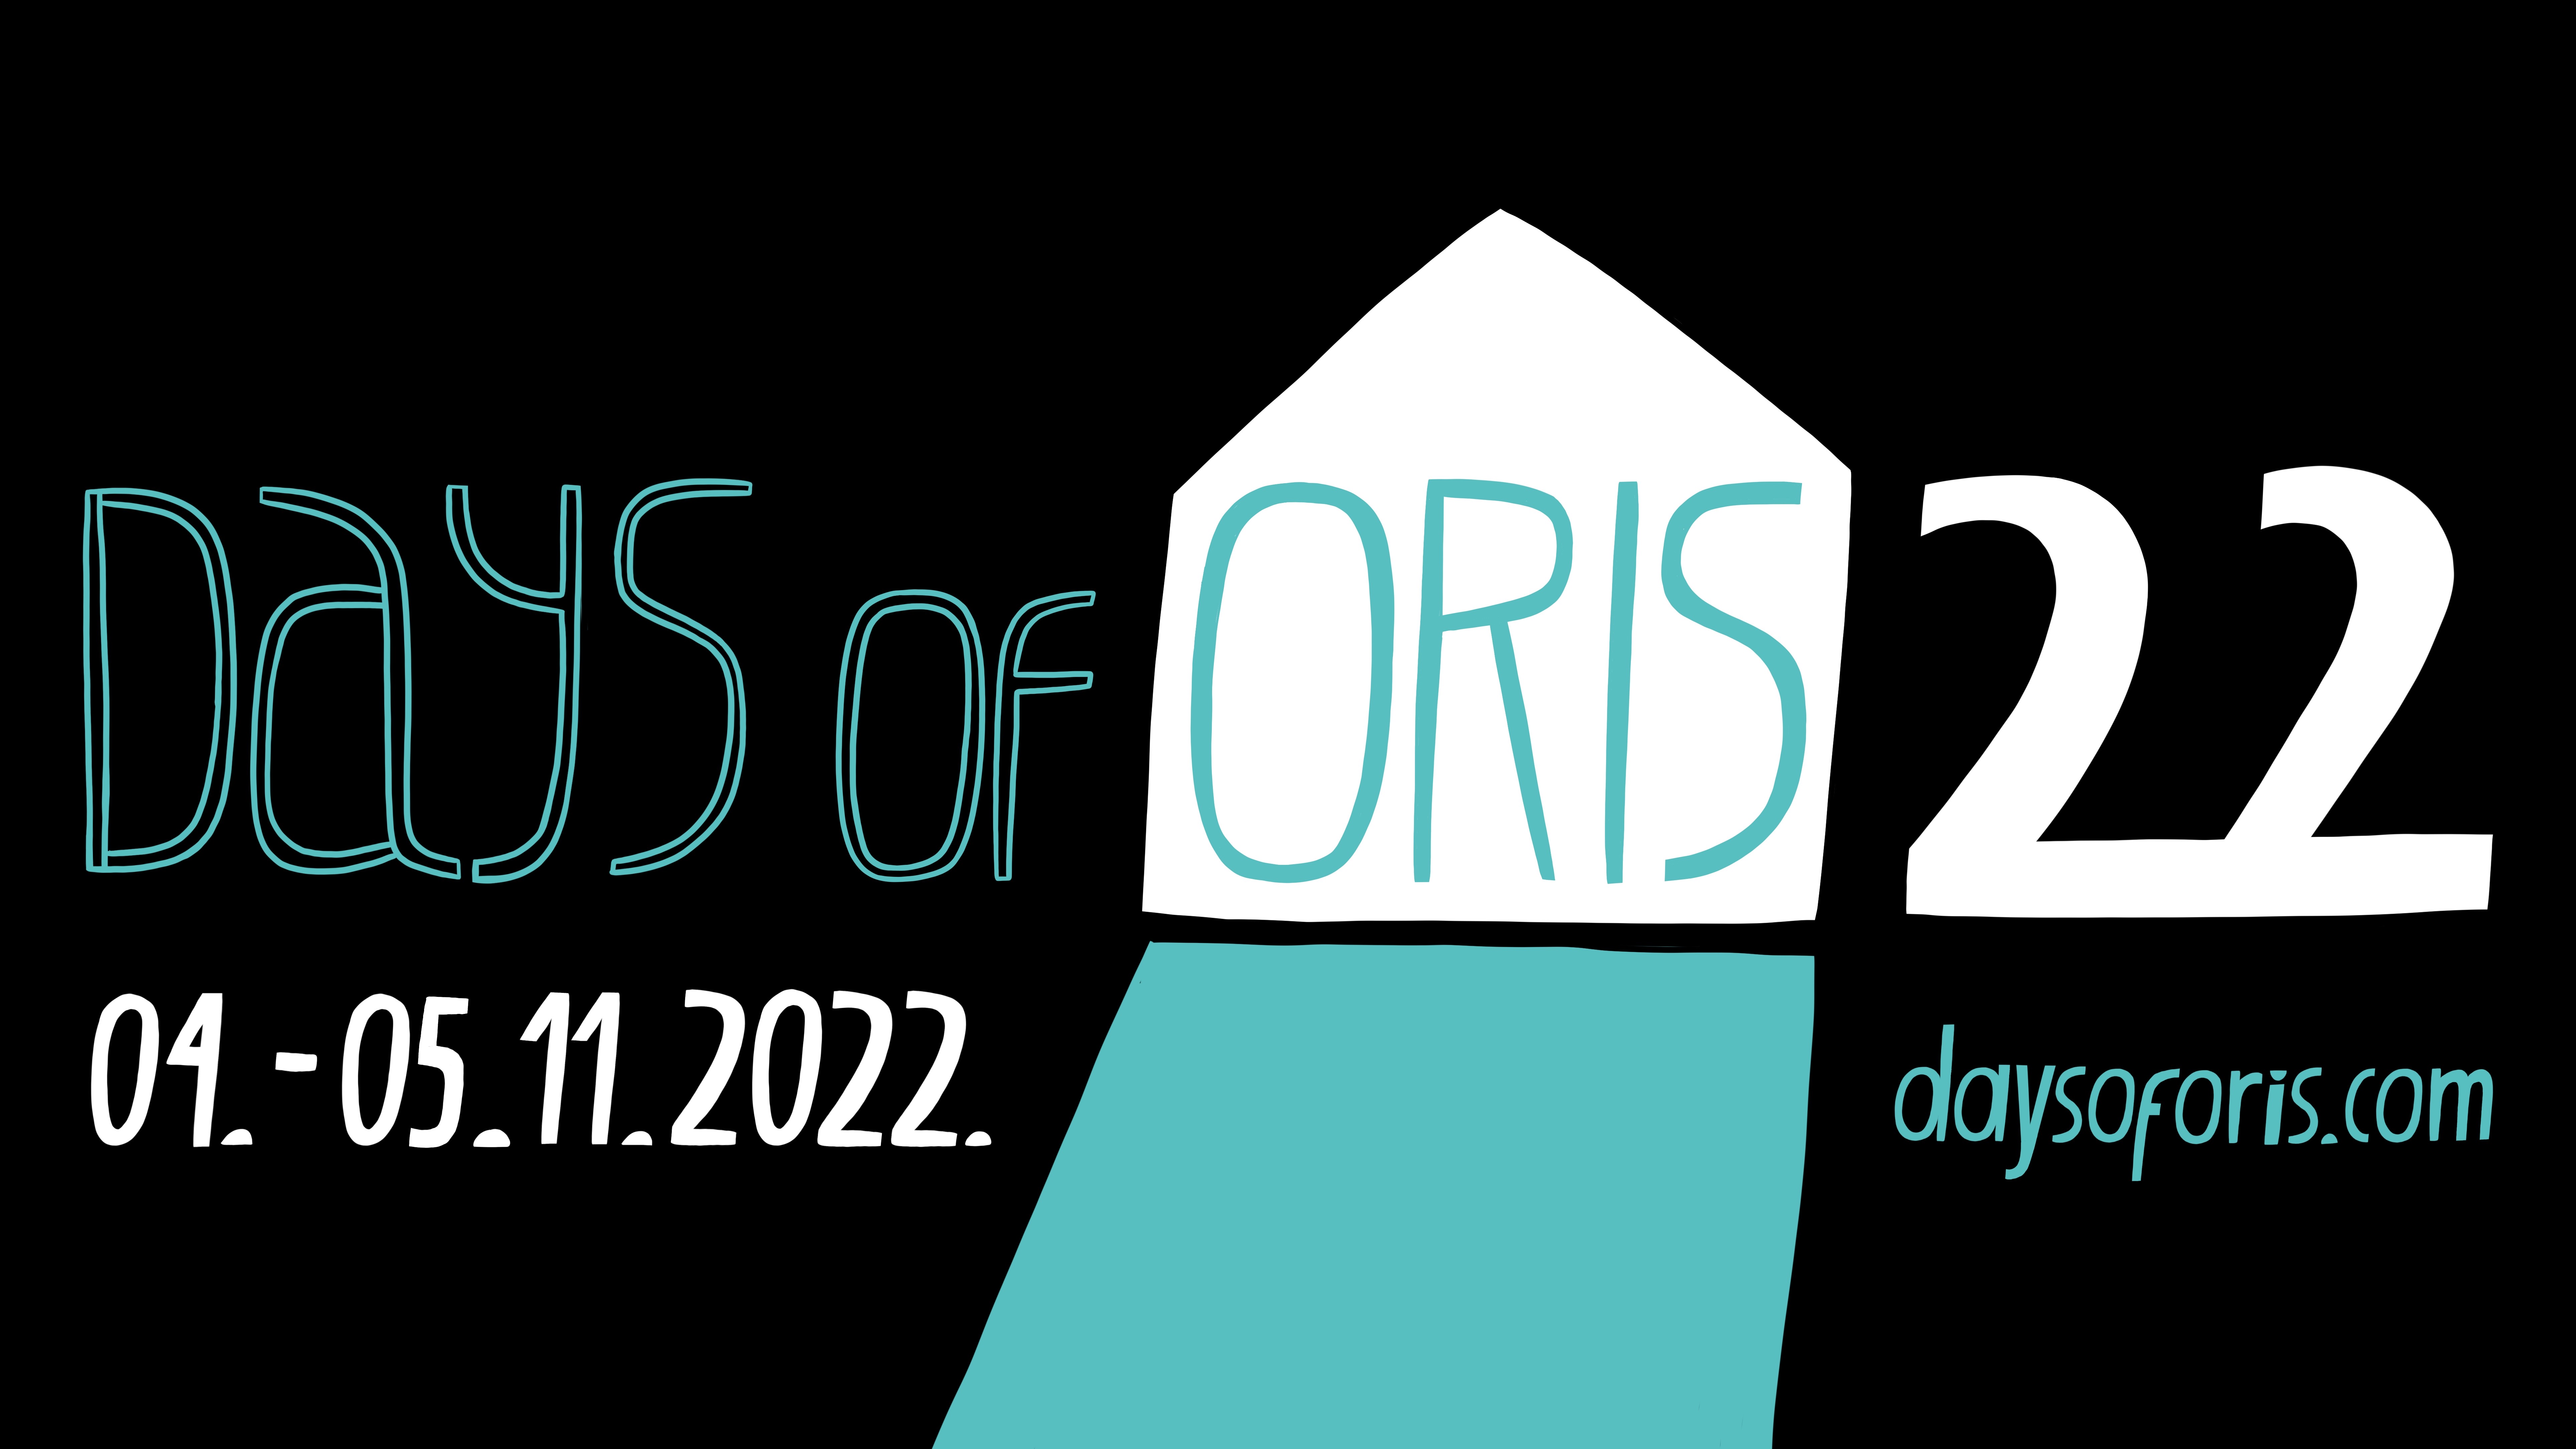 Festival Days of Oris 22